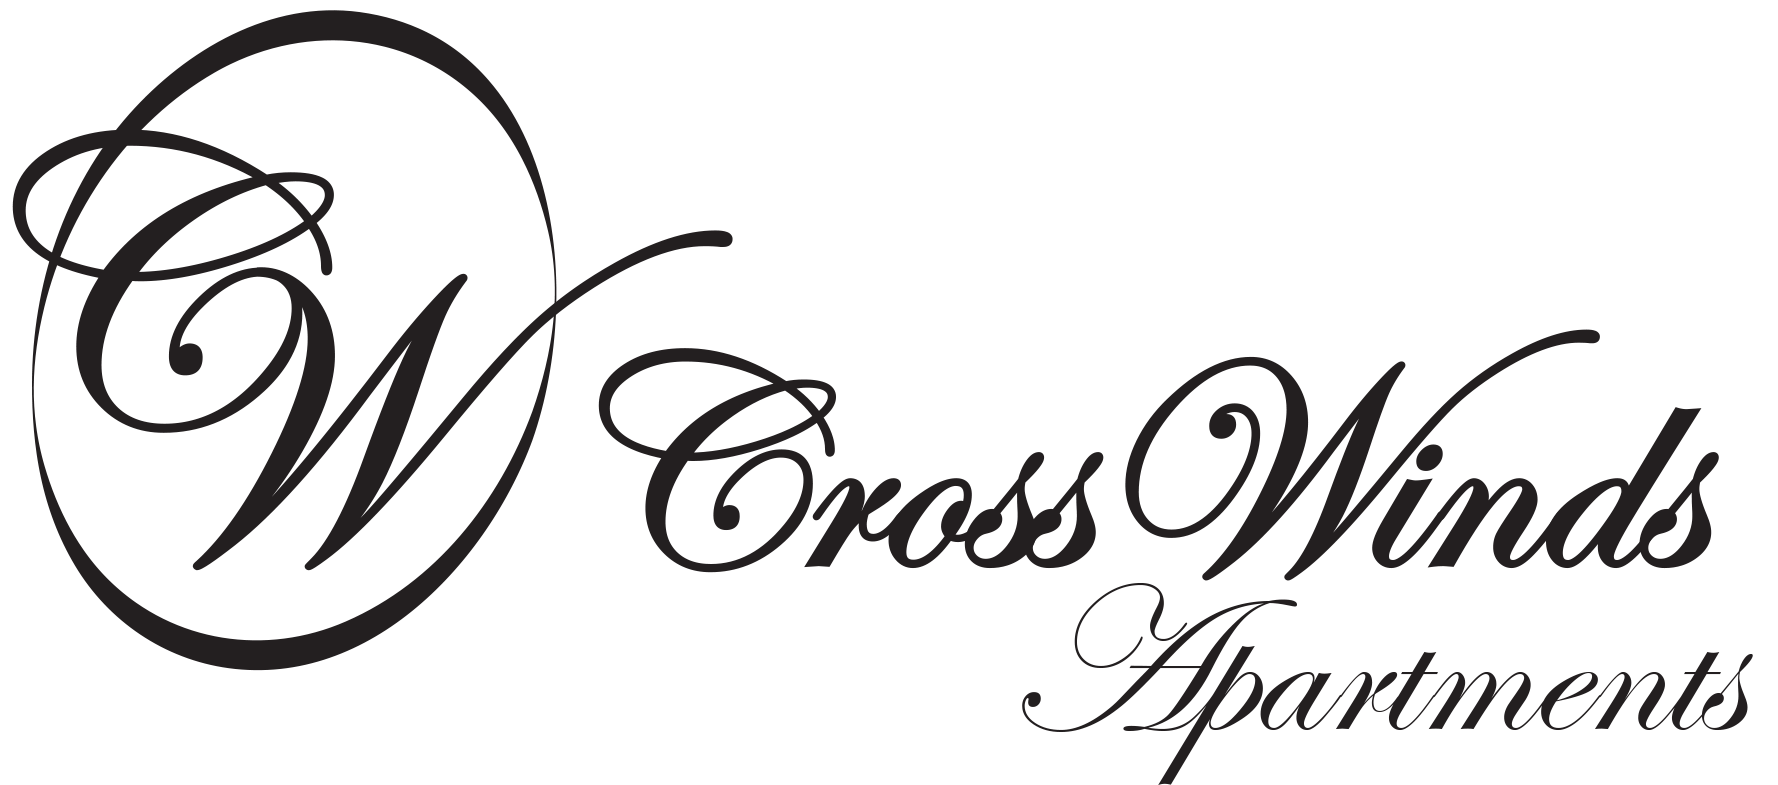 Cross Winds Apartments logo